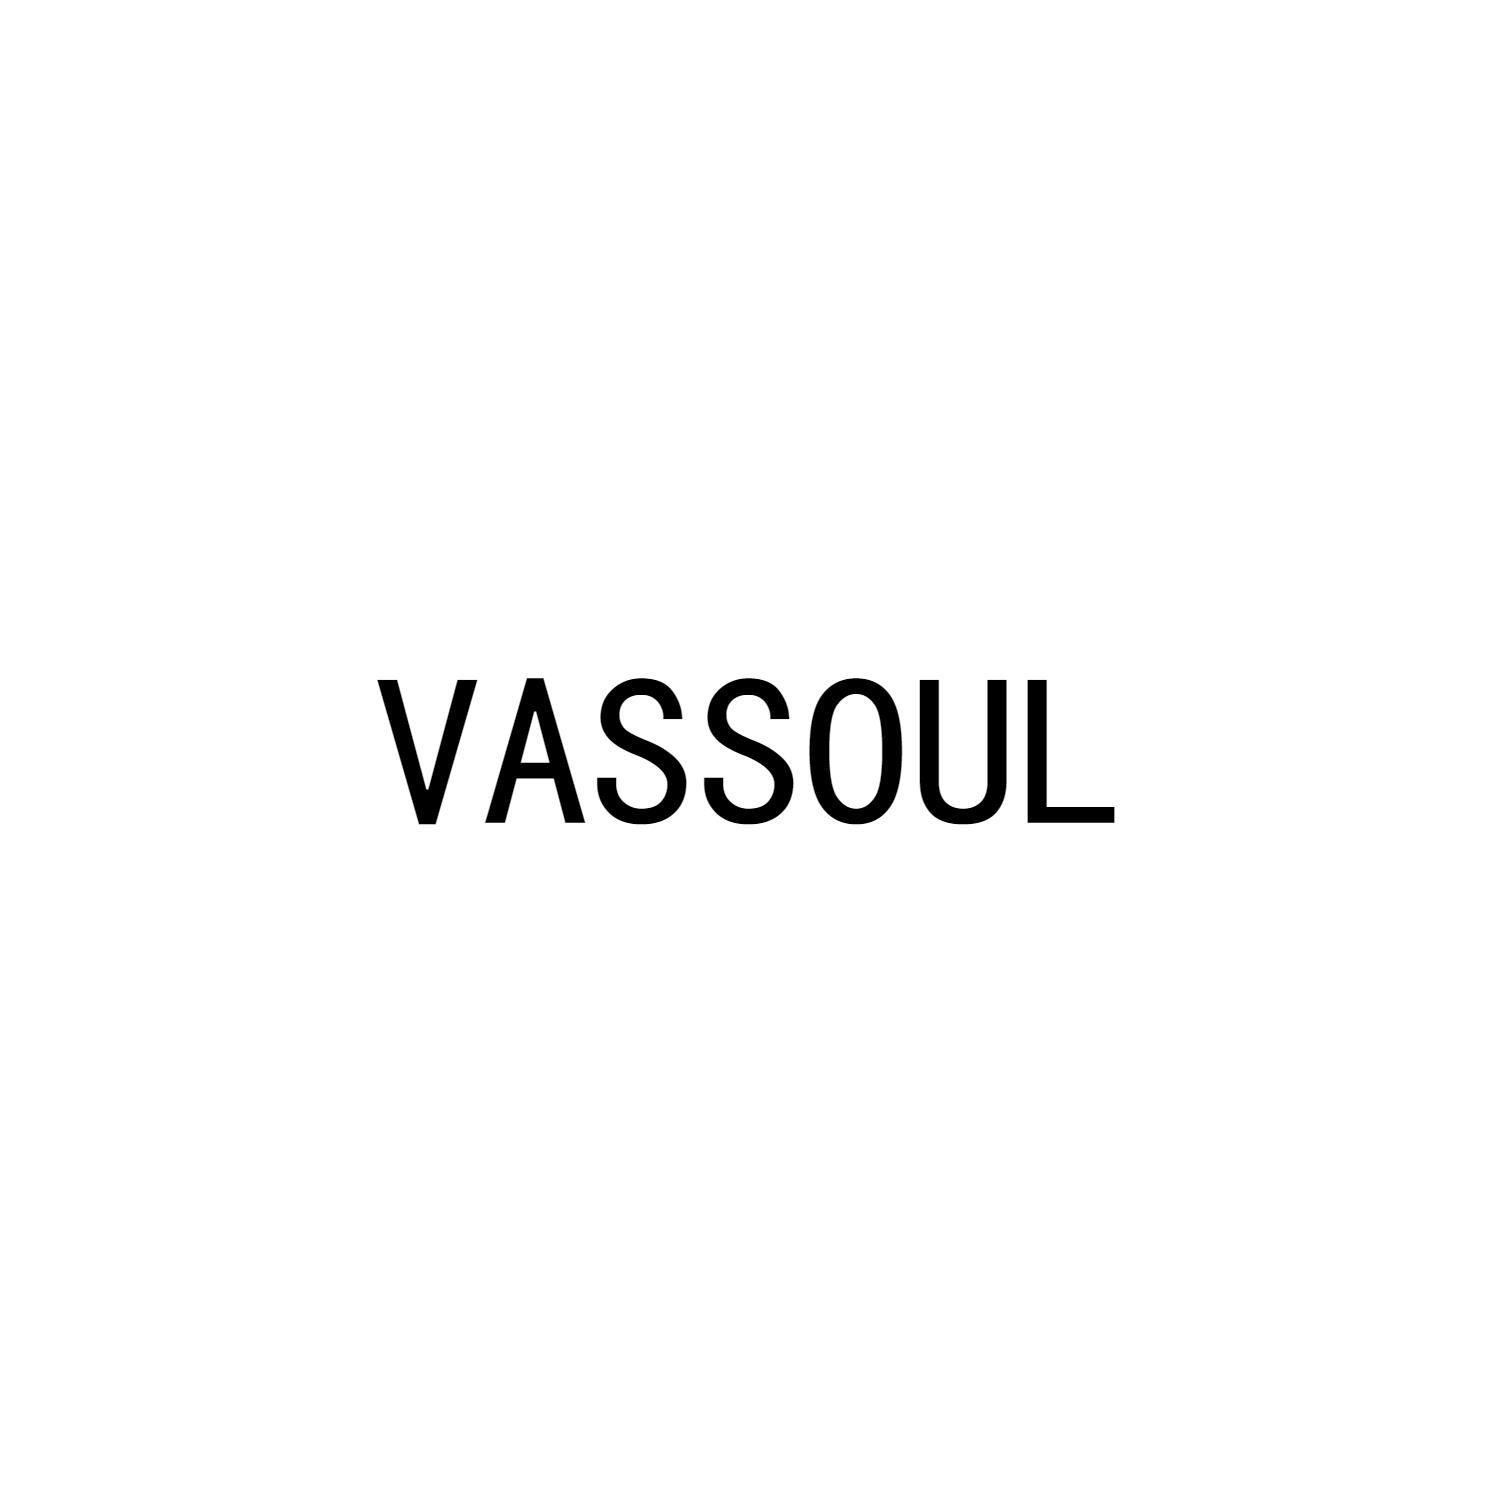 VASSOUL